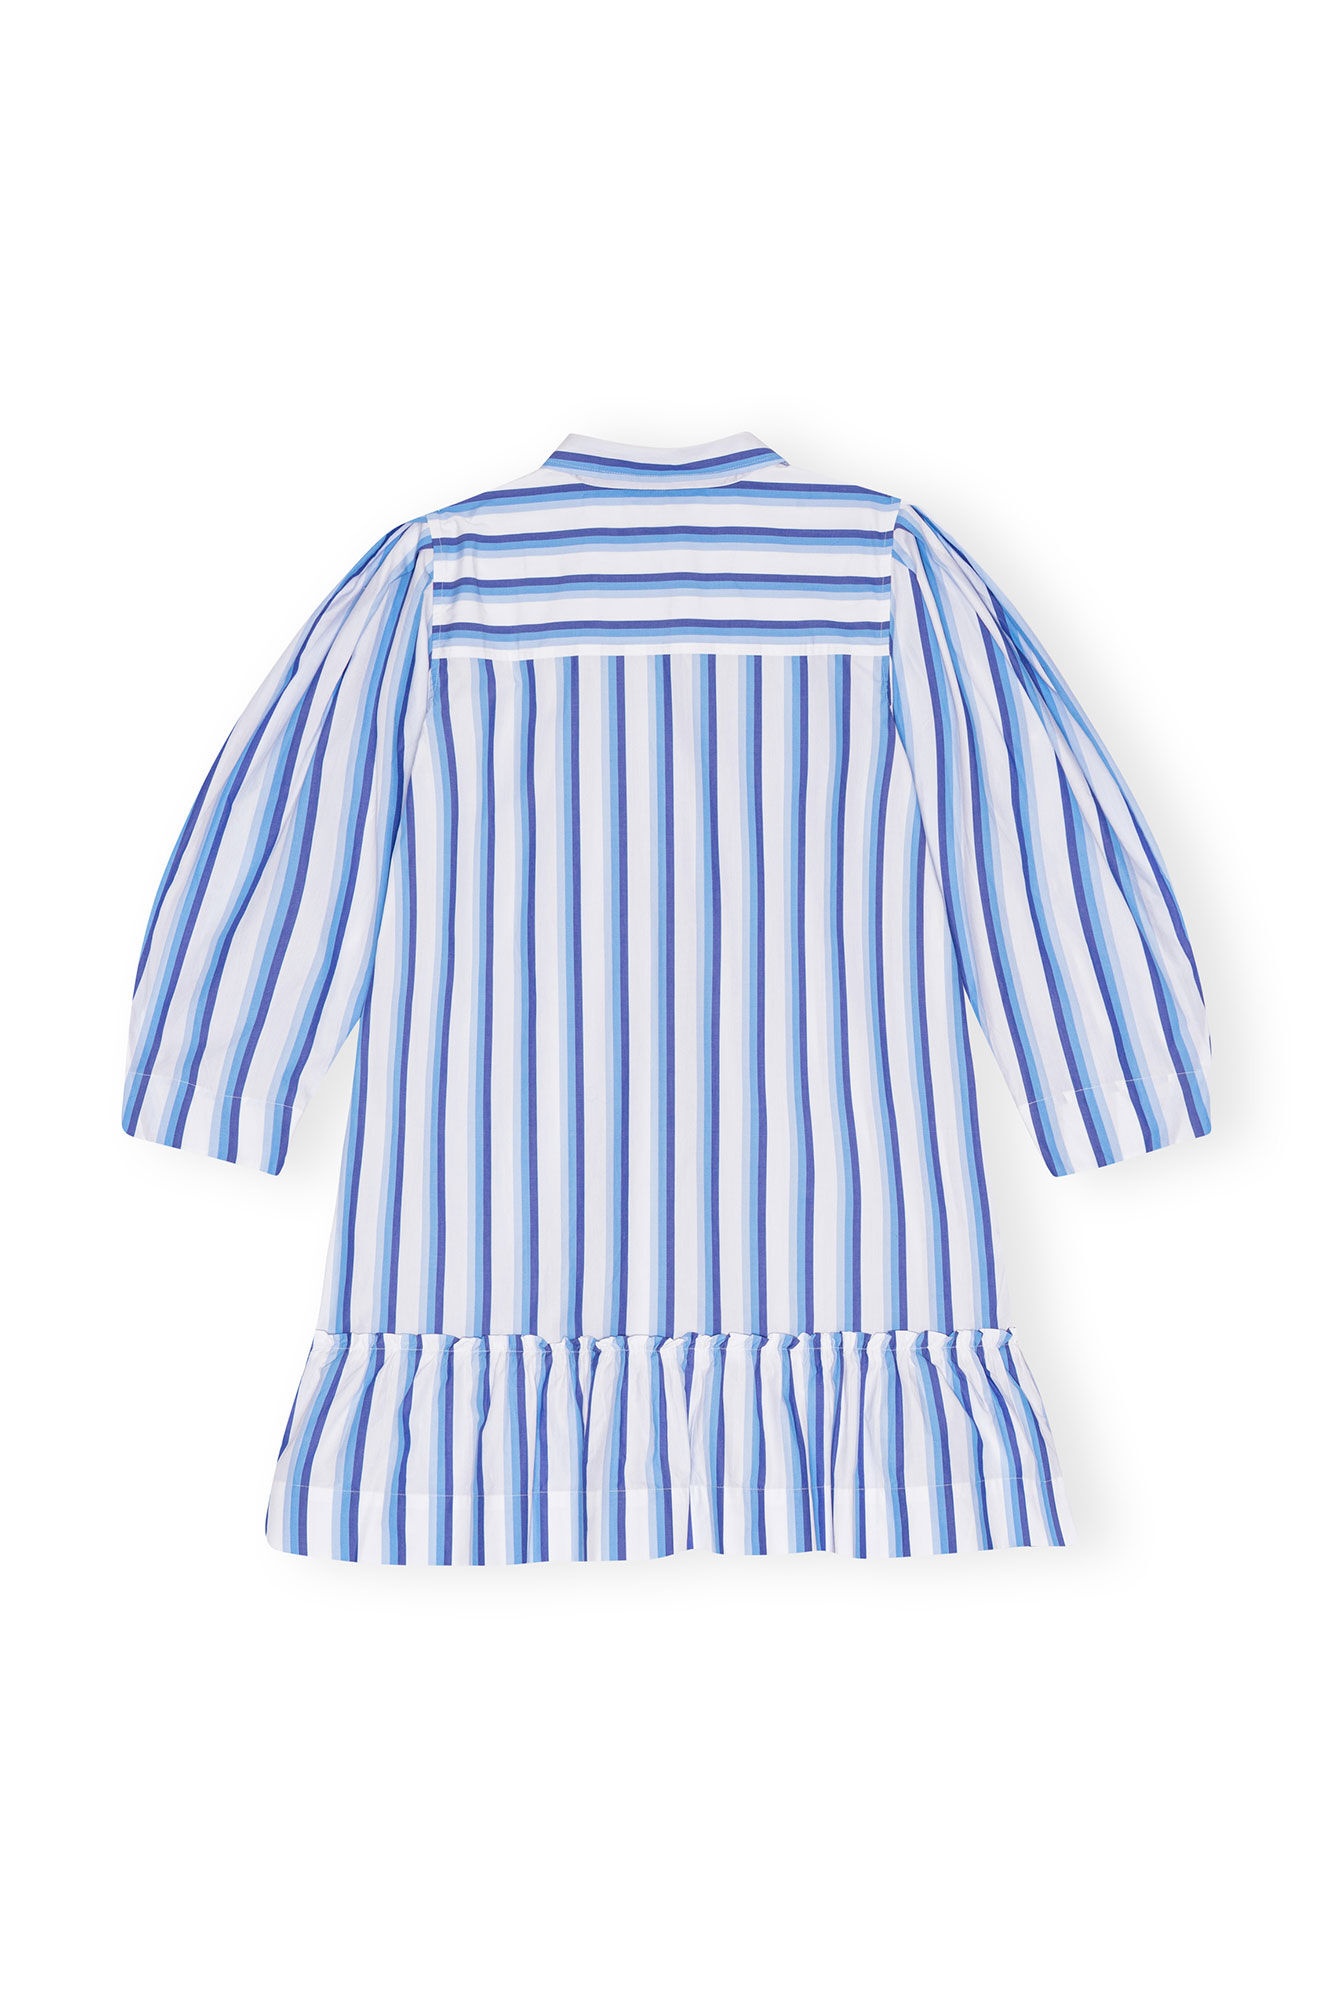 BLUE STRIPED COTTON MINI SHIRT DRESS - 3